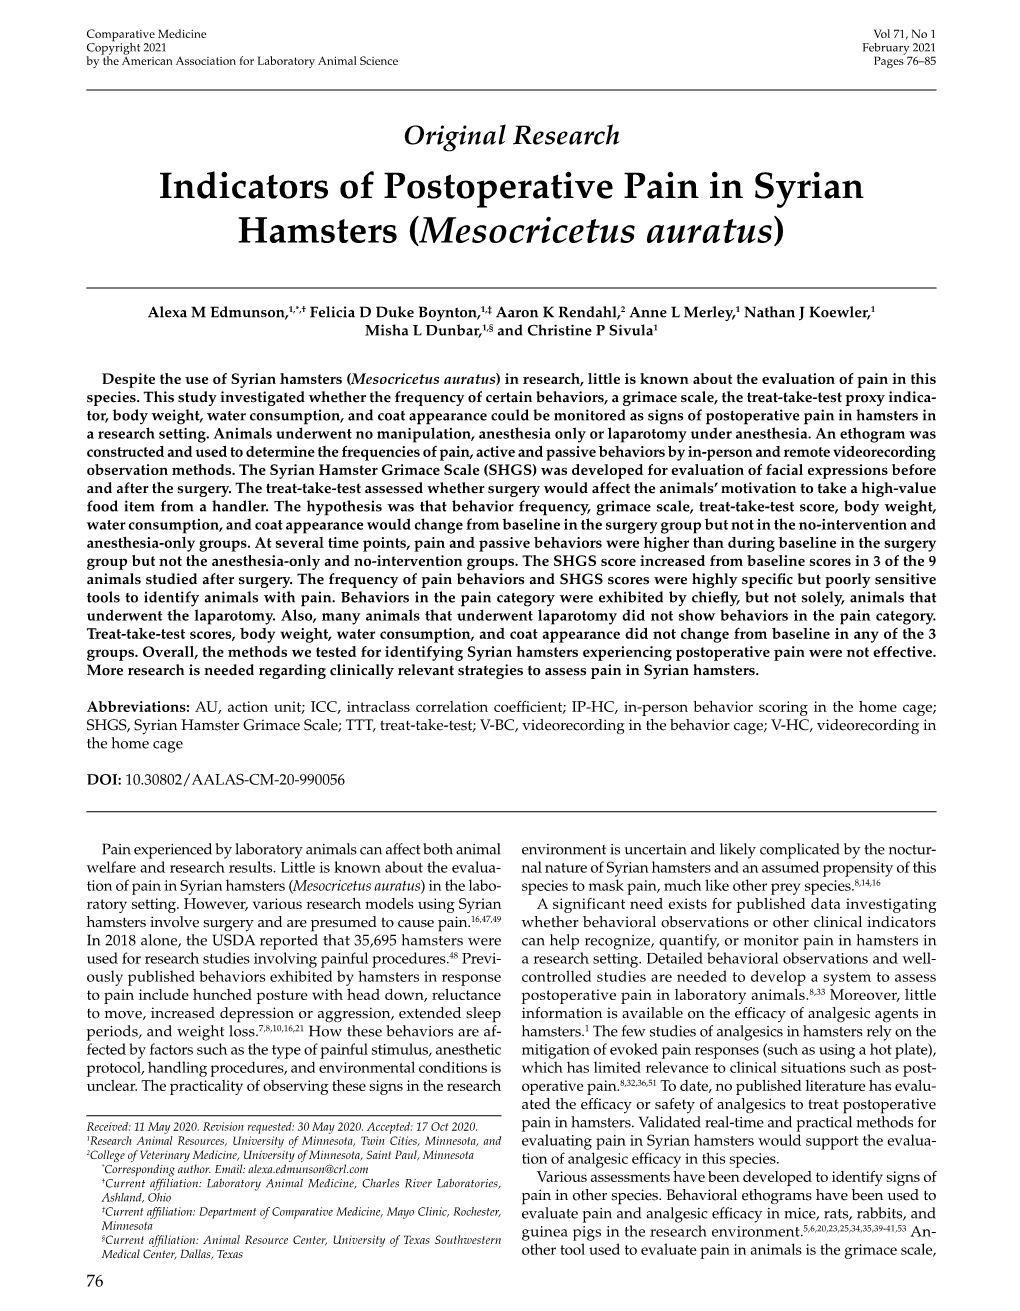 Indicators of Postoperative Pain in Syrian Hamsters (&lt;I&gt;Mesocricetus